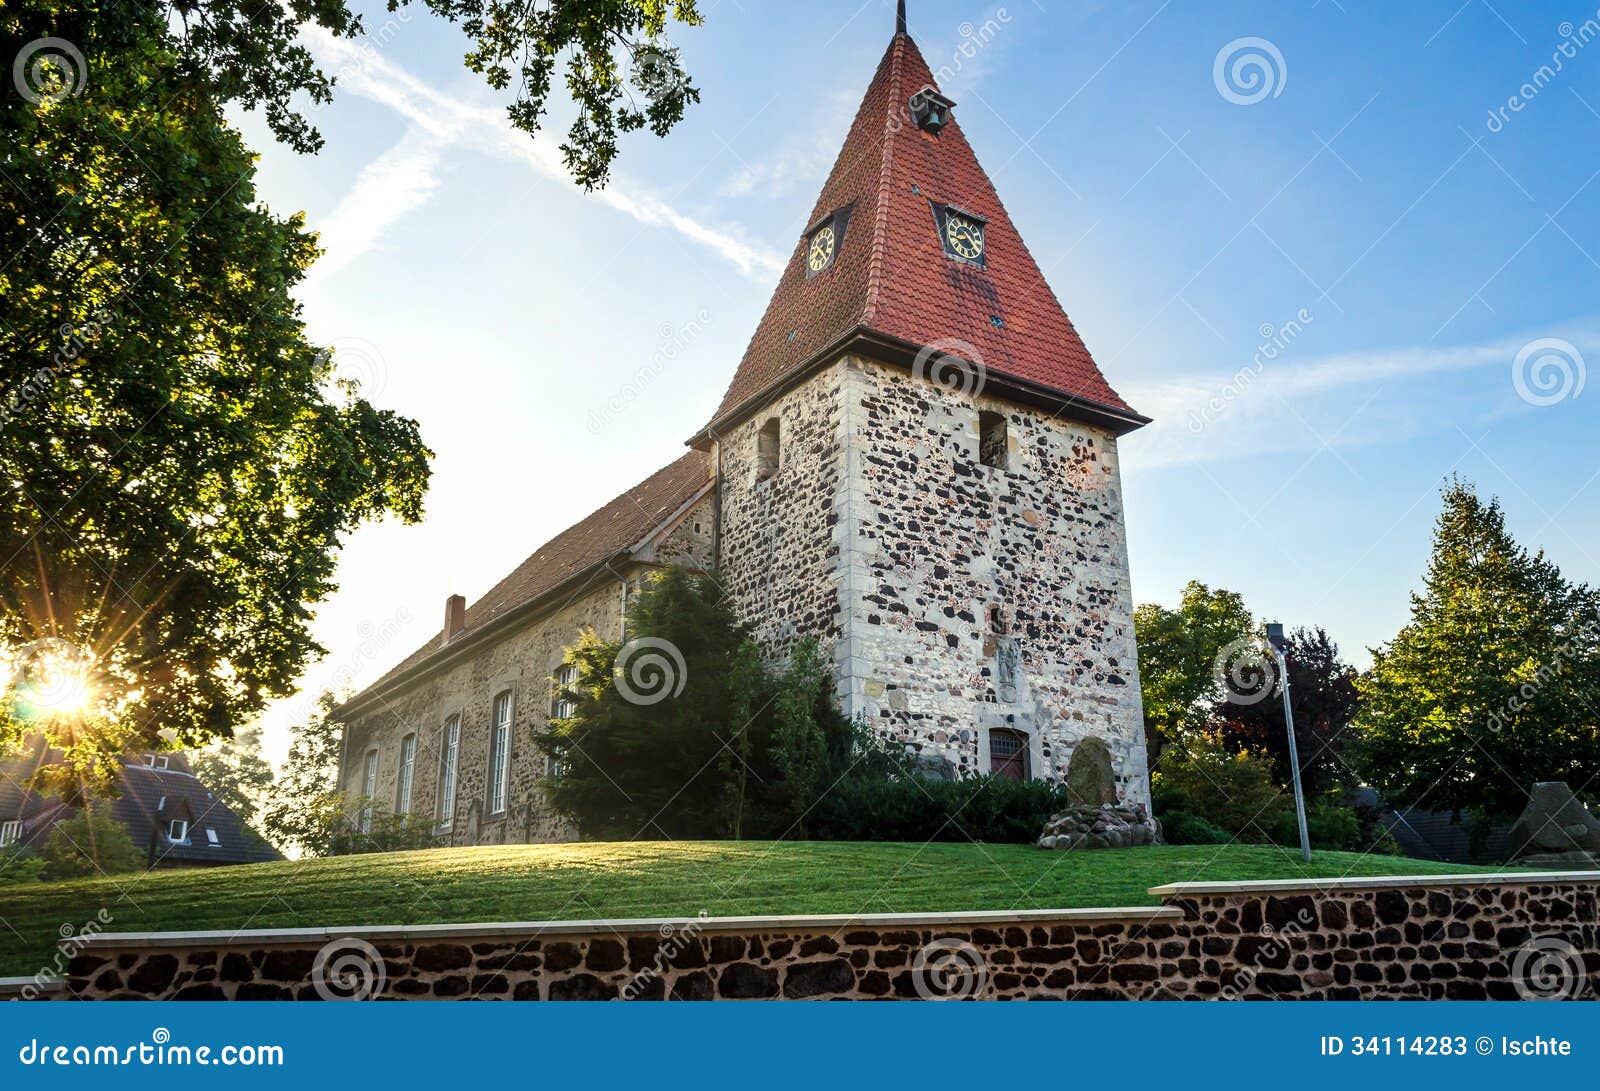 german medieval church